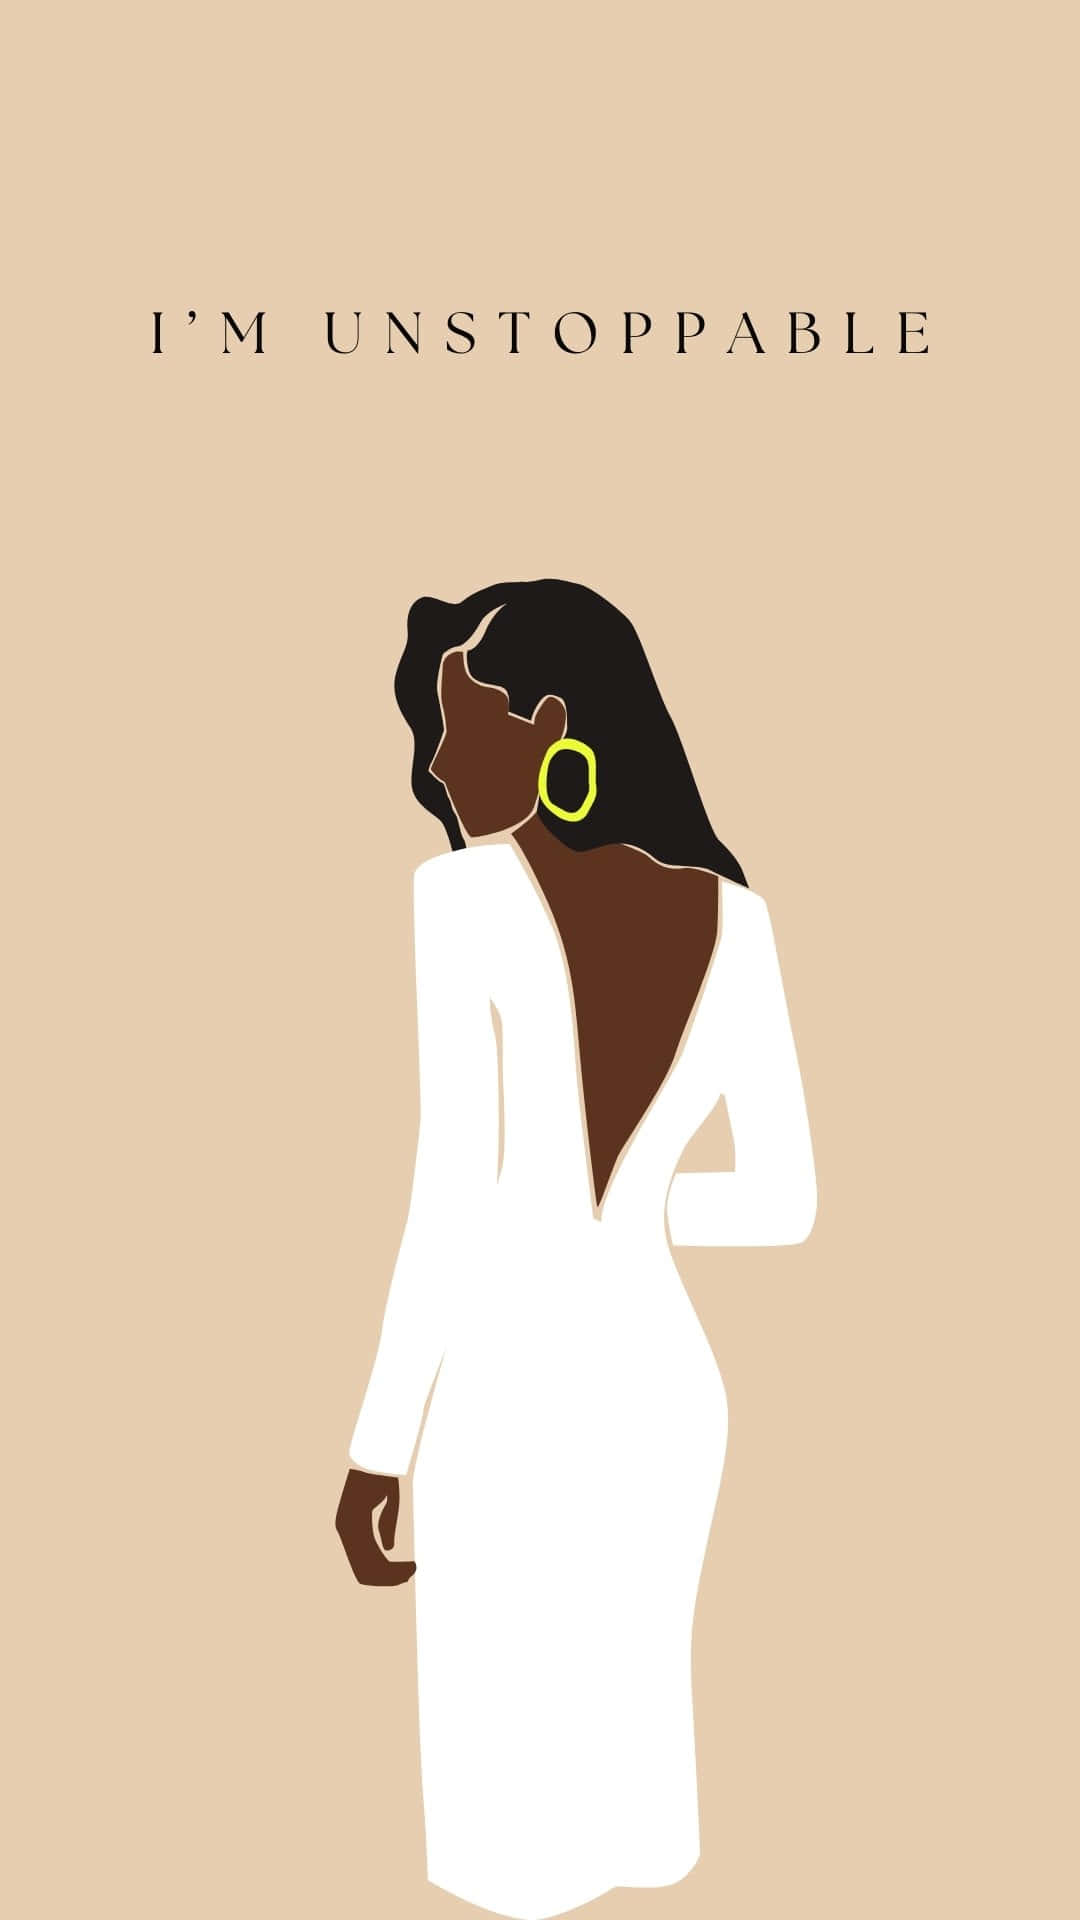 Unstoppable Black Woman Illustration Wallpaper